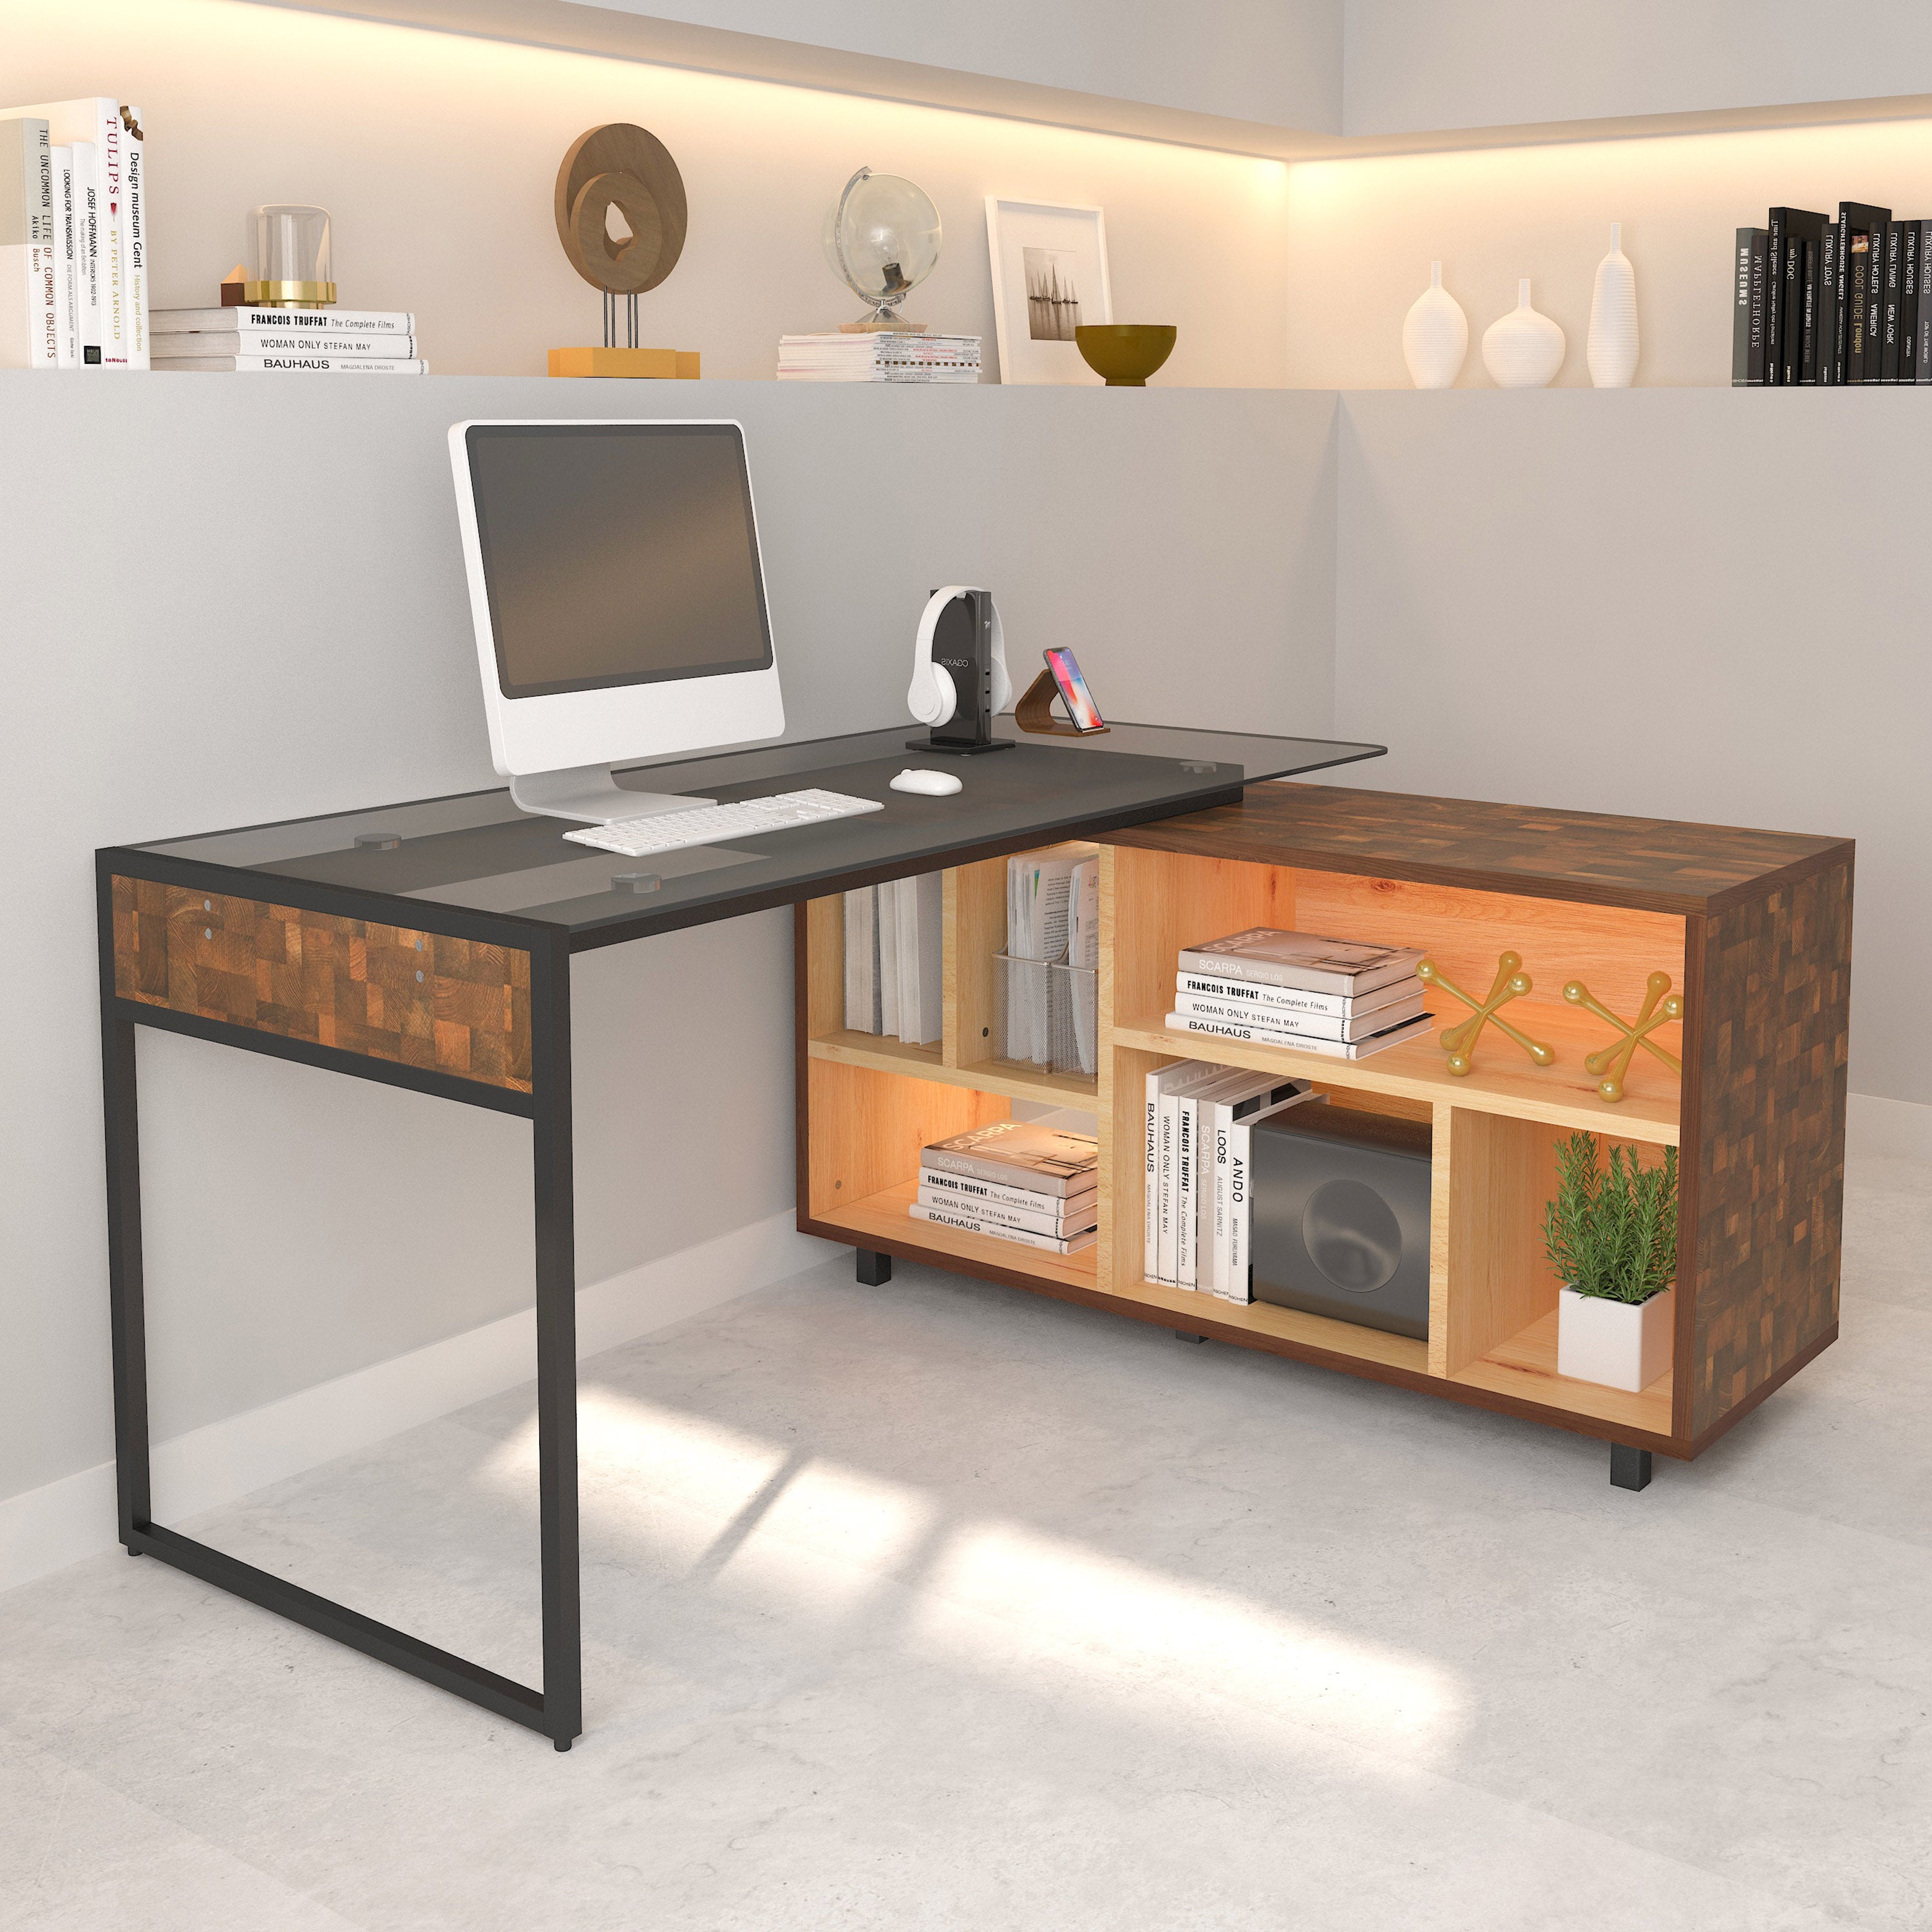 Techni Mobili L-Shaped Desk with Storage